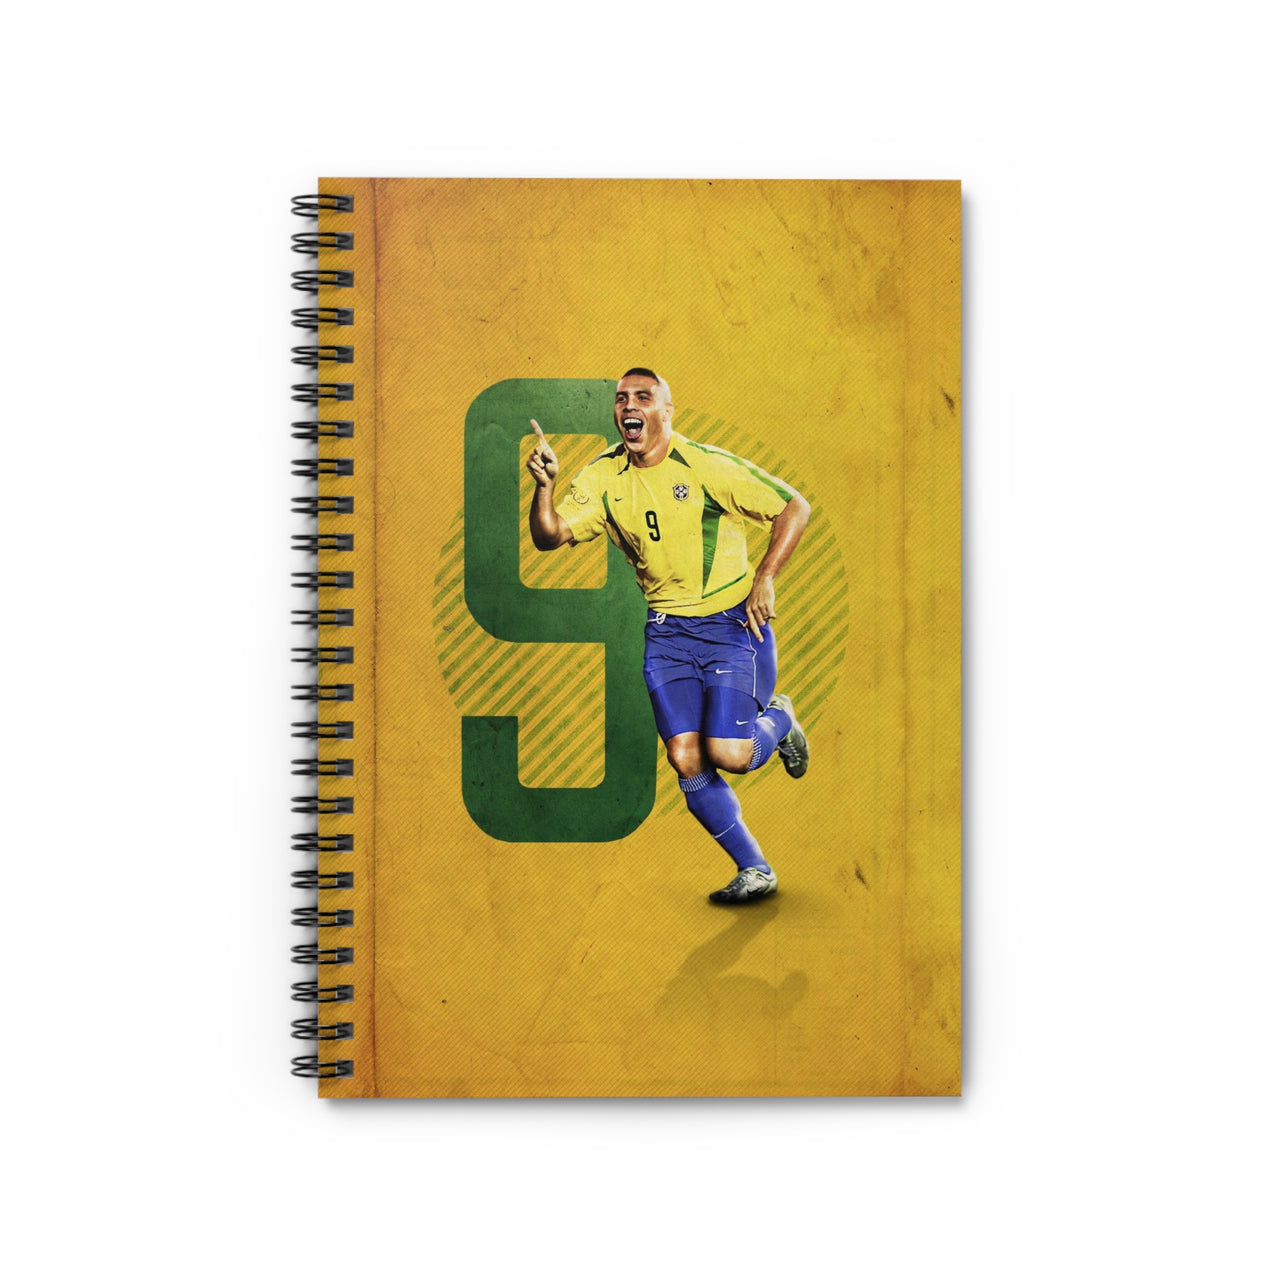 Ronaldo Phenomenon Spiral Notebook - Ruled Line